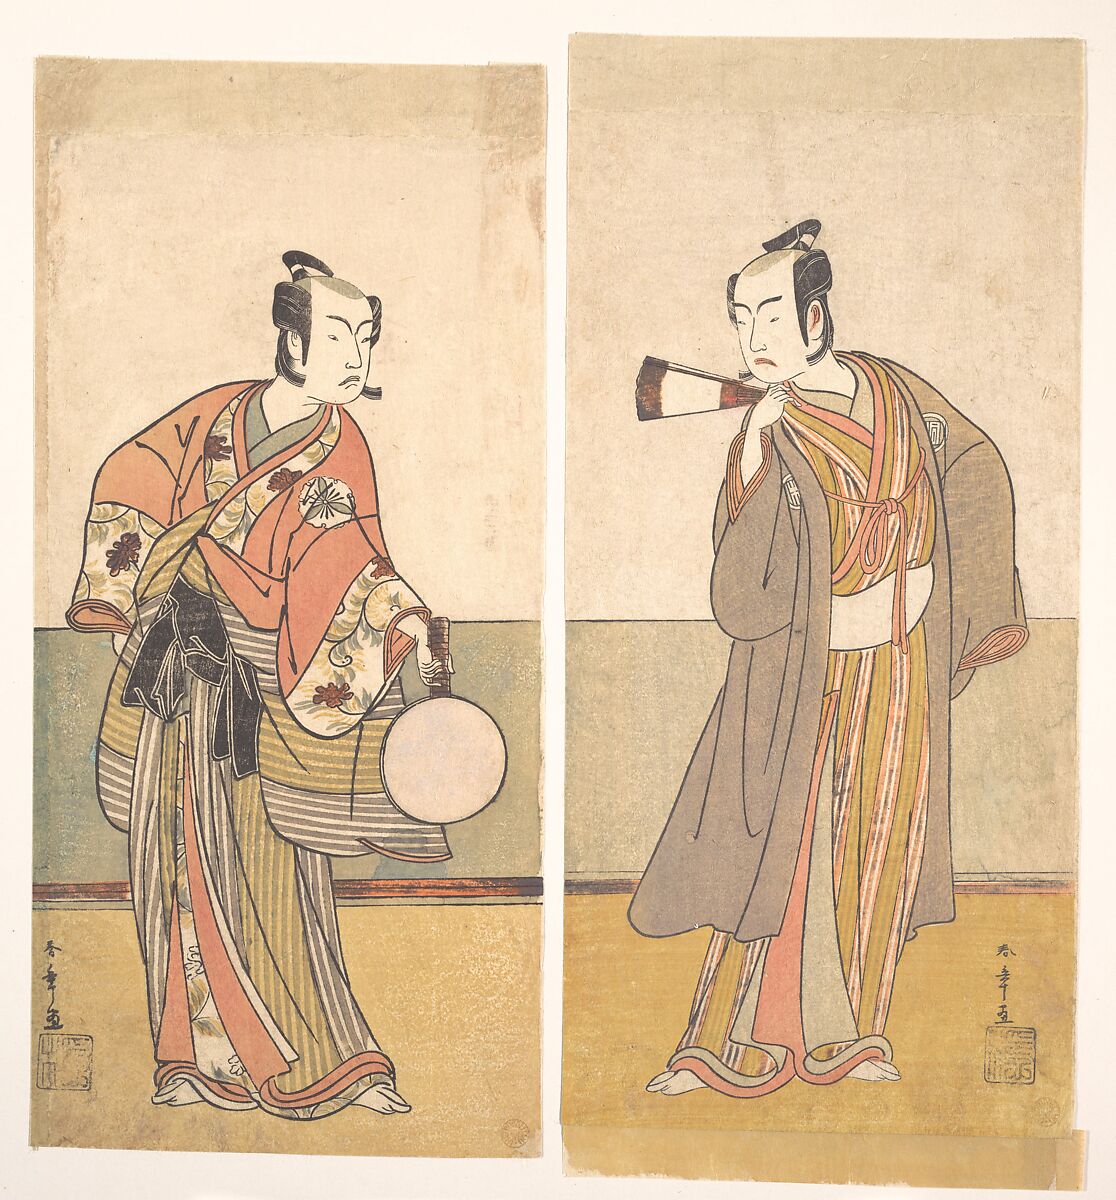 The Actors the Fourth Matsumoto Koshiro and the Arashi Sangoro, Katsukawa Shunshō　勝川春章 (Japanese, 1726–1792), Diptych of woodblock prints (nishiki-e); ink and color on paper, Japan 